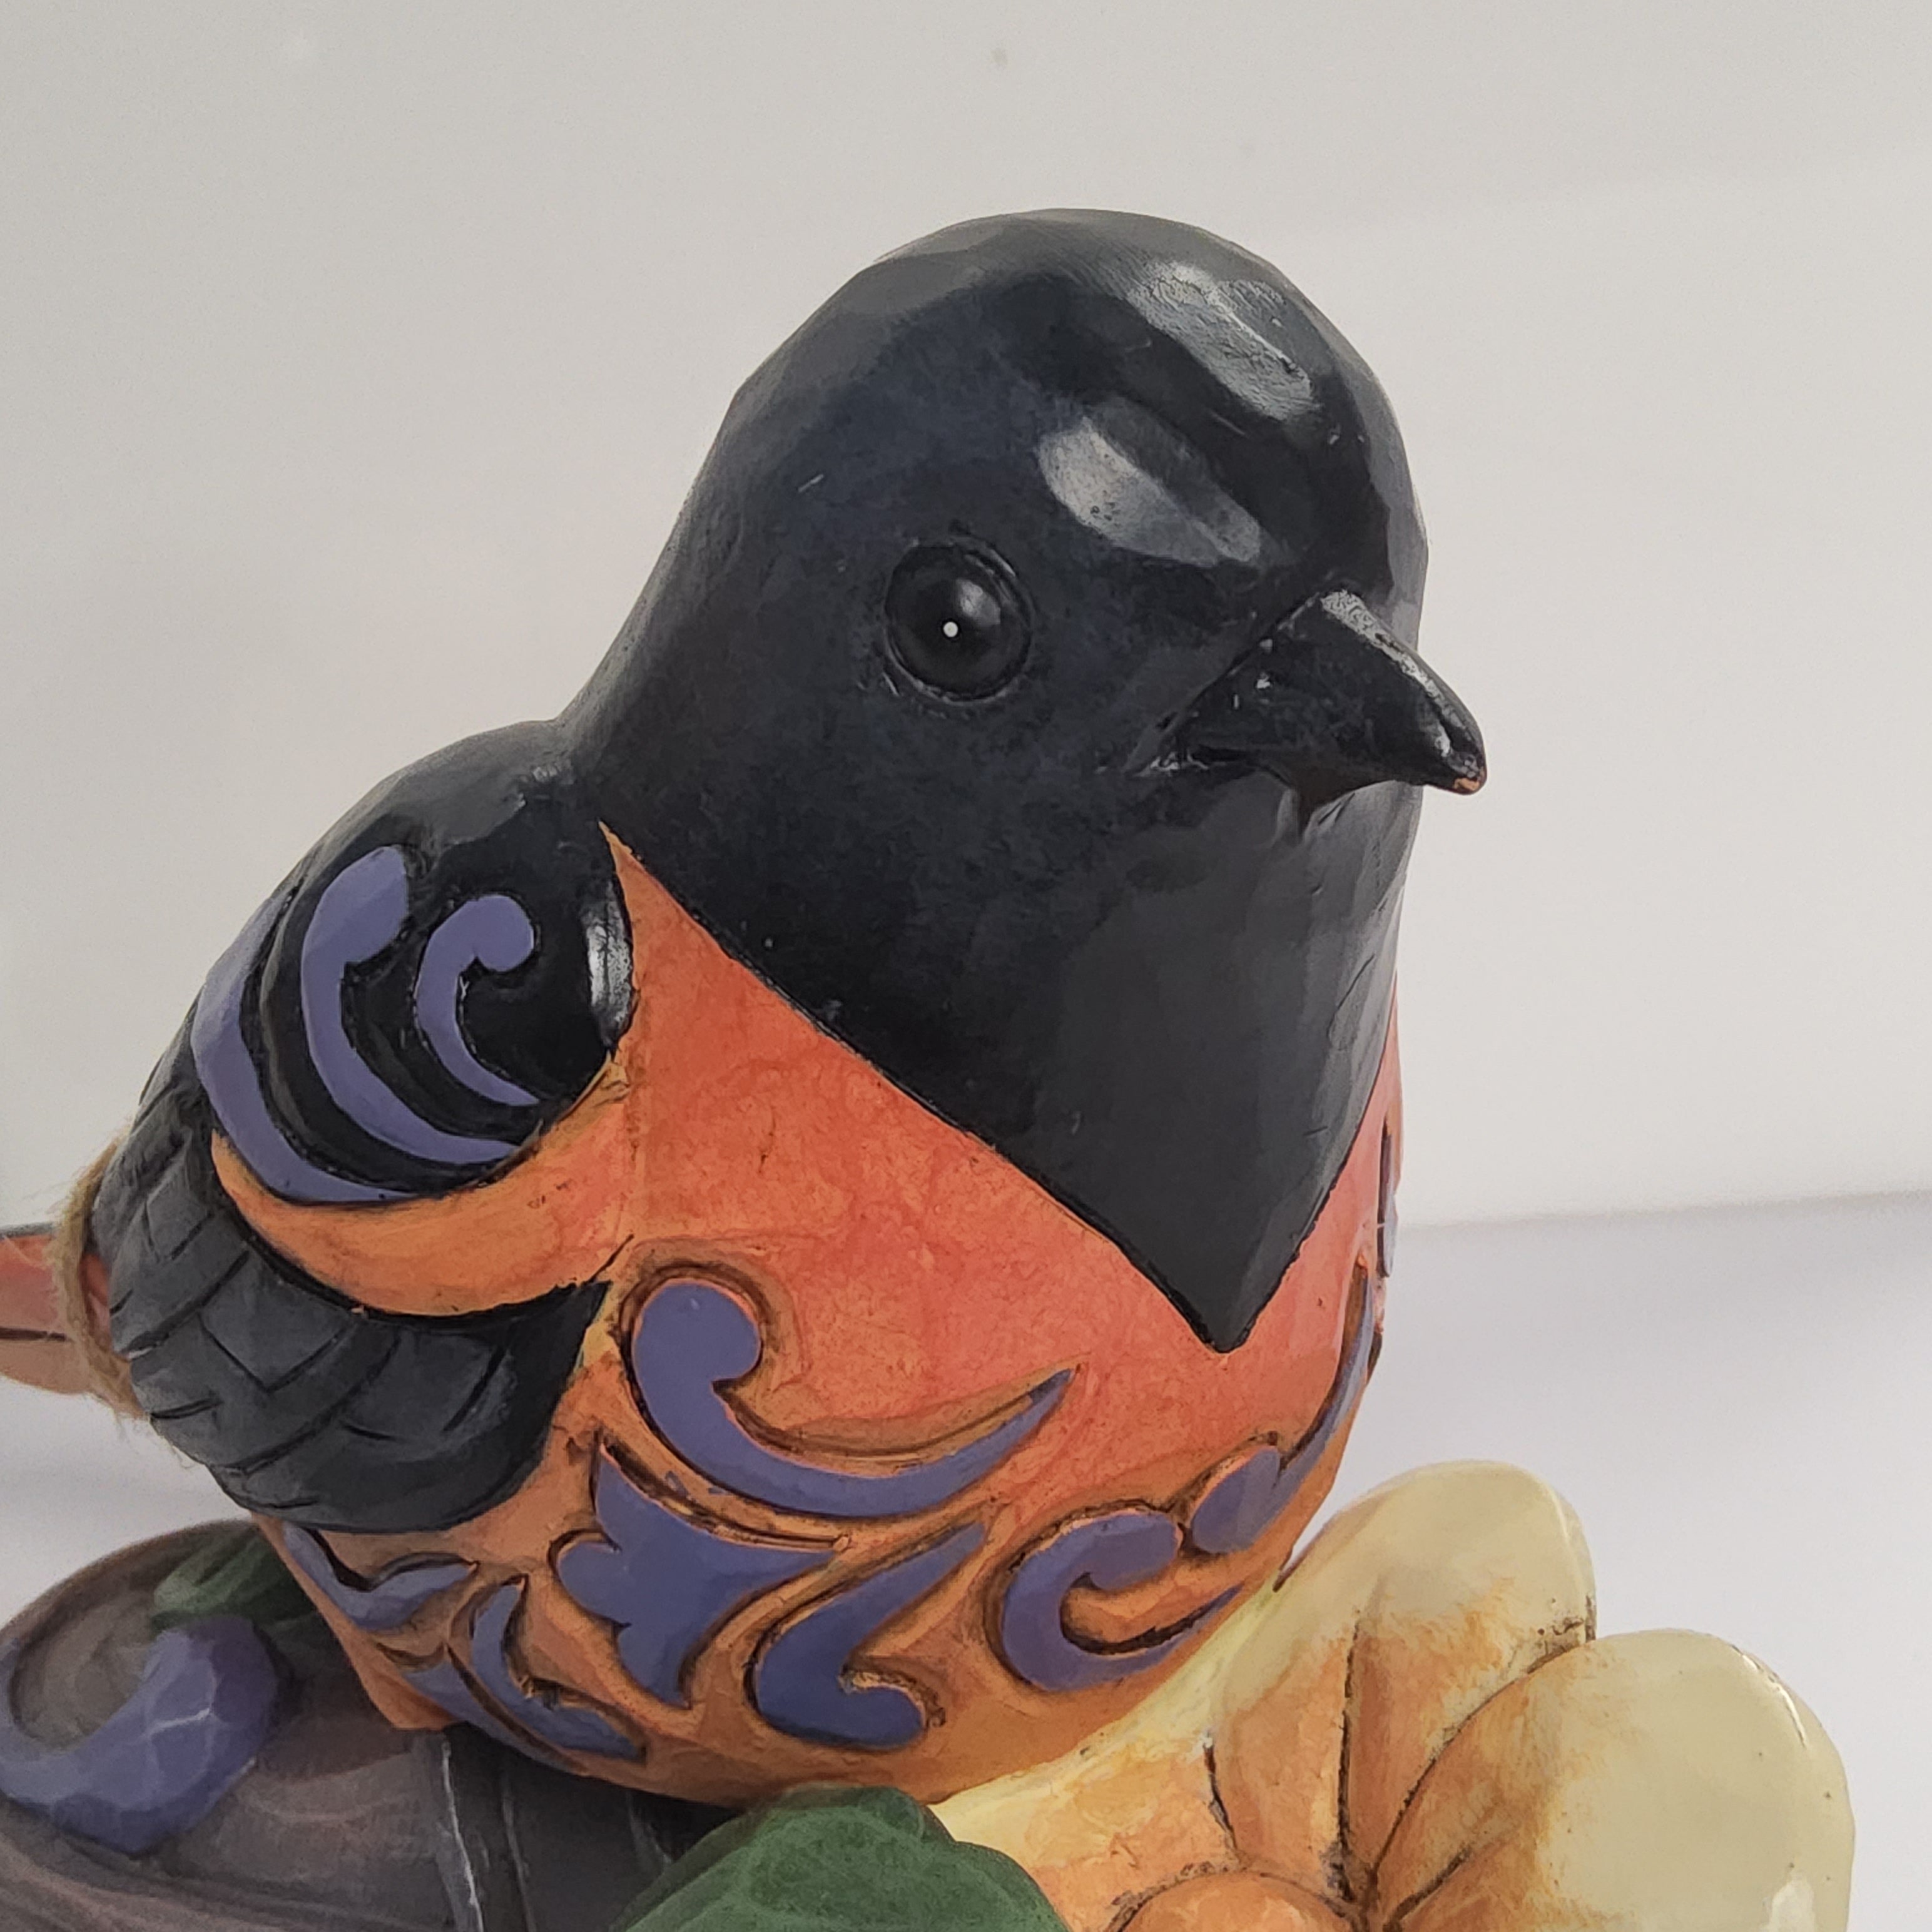 Enesco / Jim Shore Bird Figurine - Baltimore Oriole - "Bold & Beautiful" 6010281